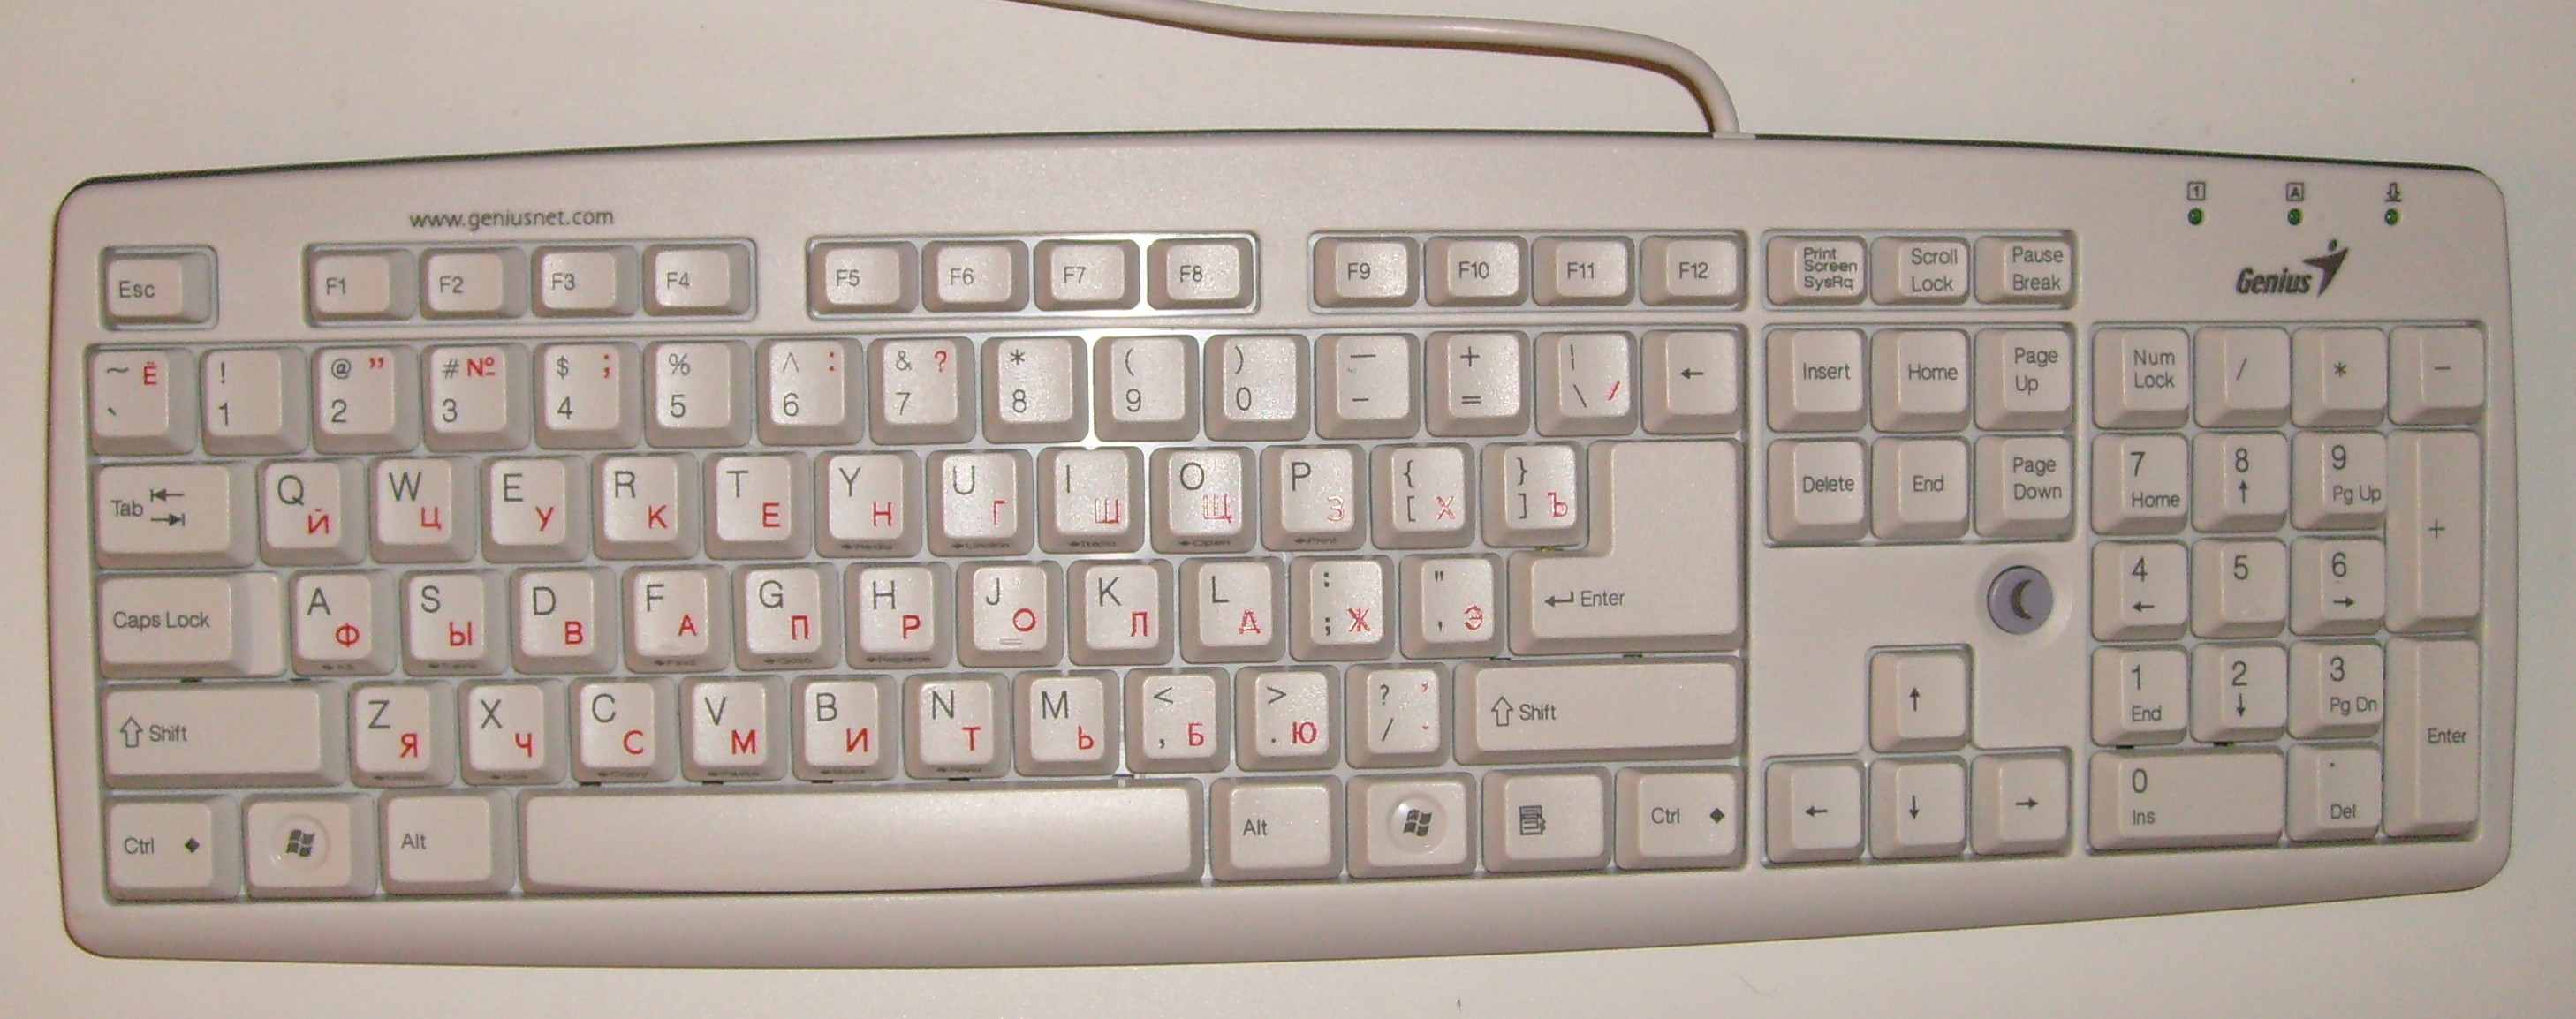 Genius russian keyboard